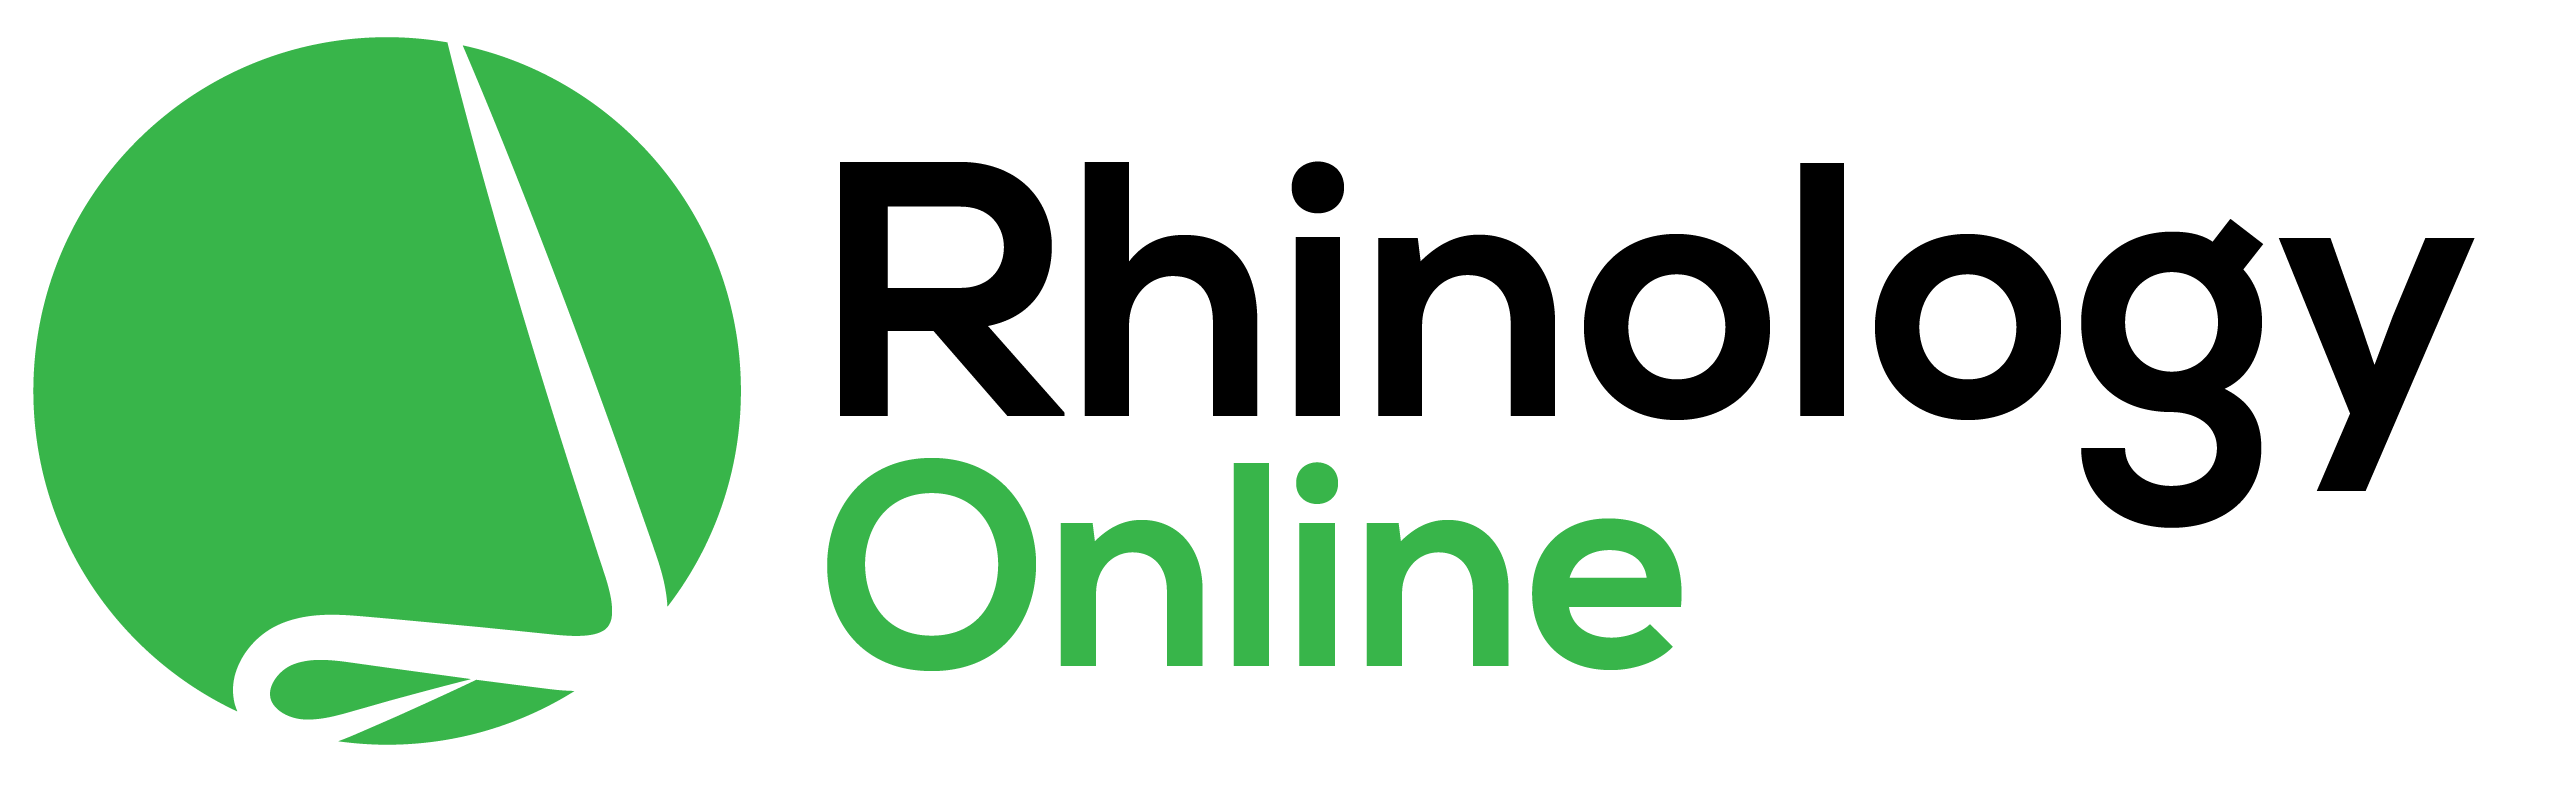 Rhinology online logo